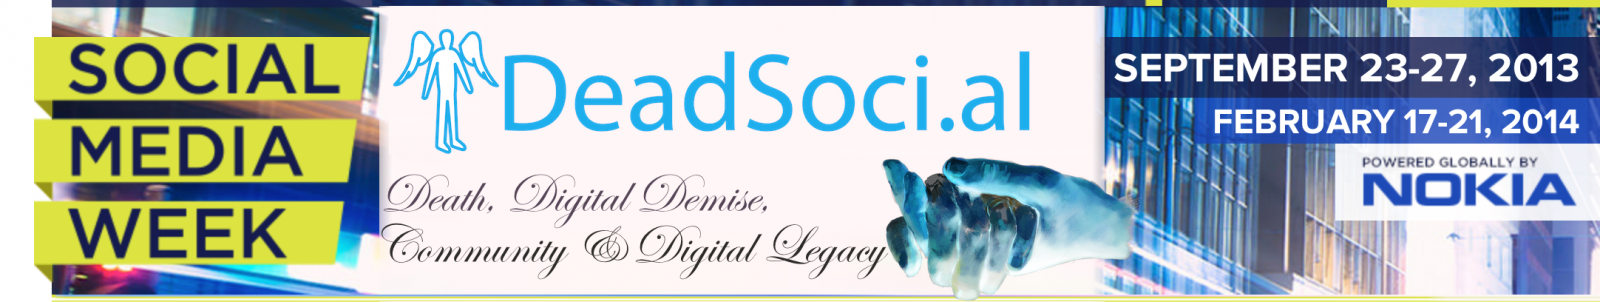 DeadSocial Banner - Social Media Week